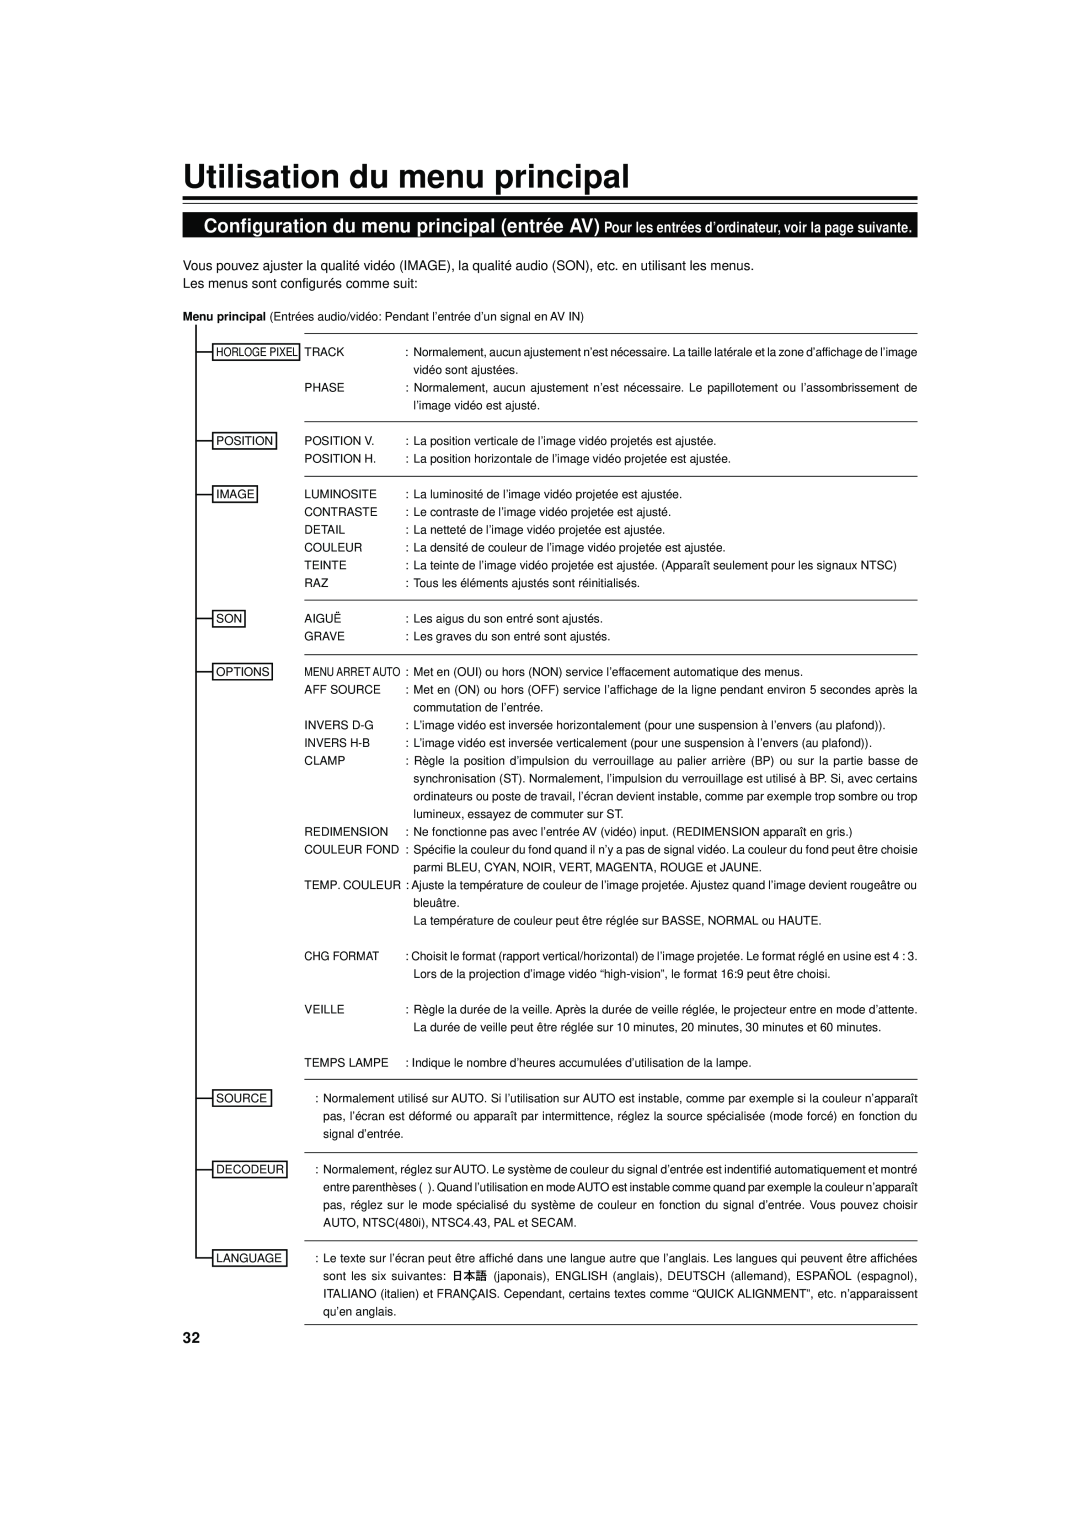 JVC DLA-S15U manual Utilisation du menu principal 